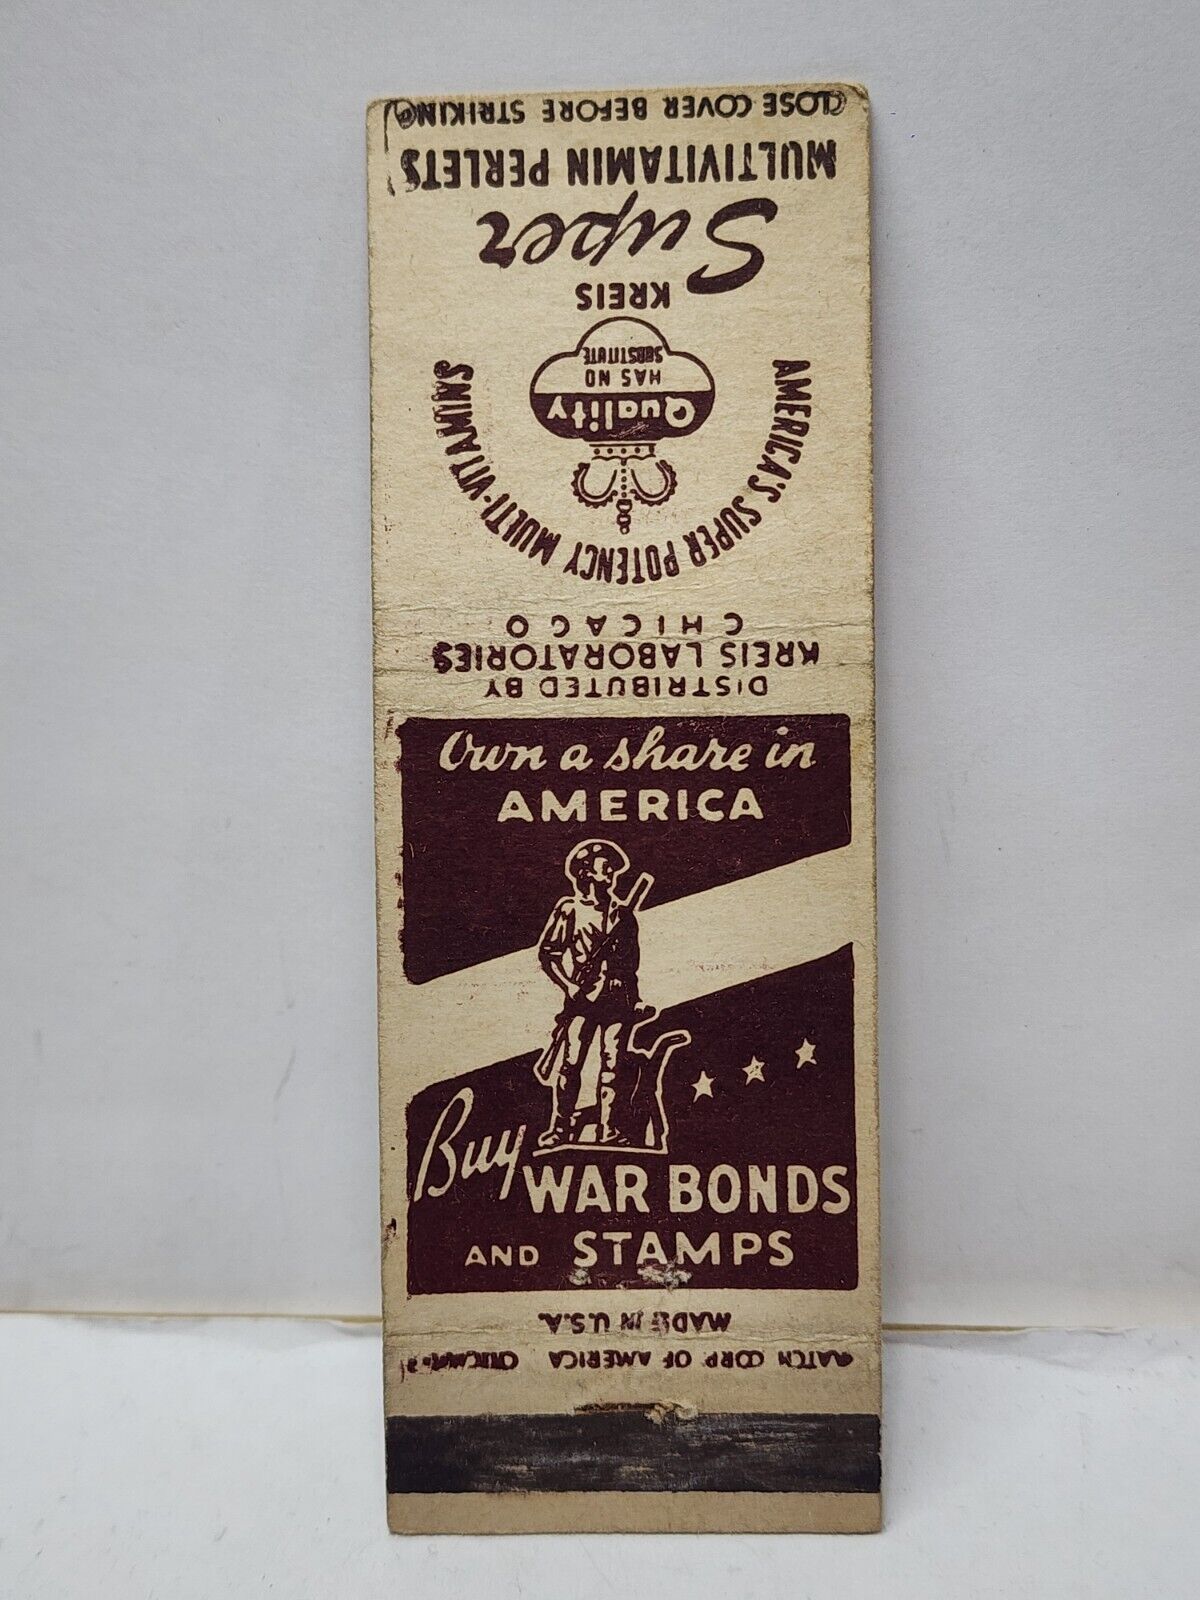 Vintage Matchbook Cover - Kreis Multivitamin BUY WAR BONDS WWII Chicago Illinois